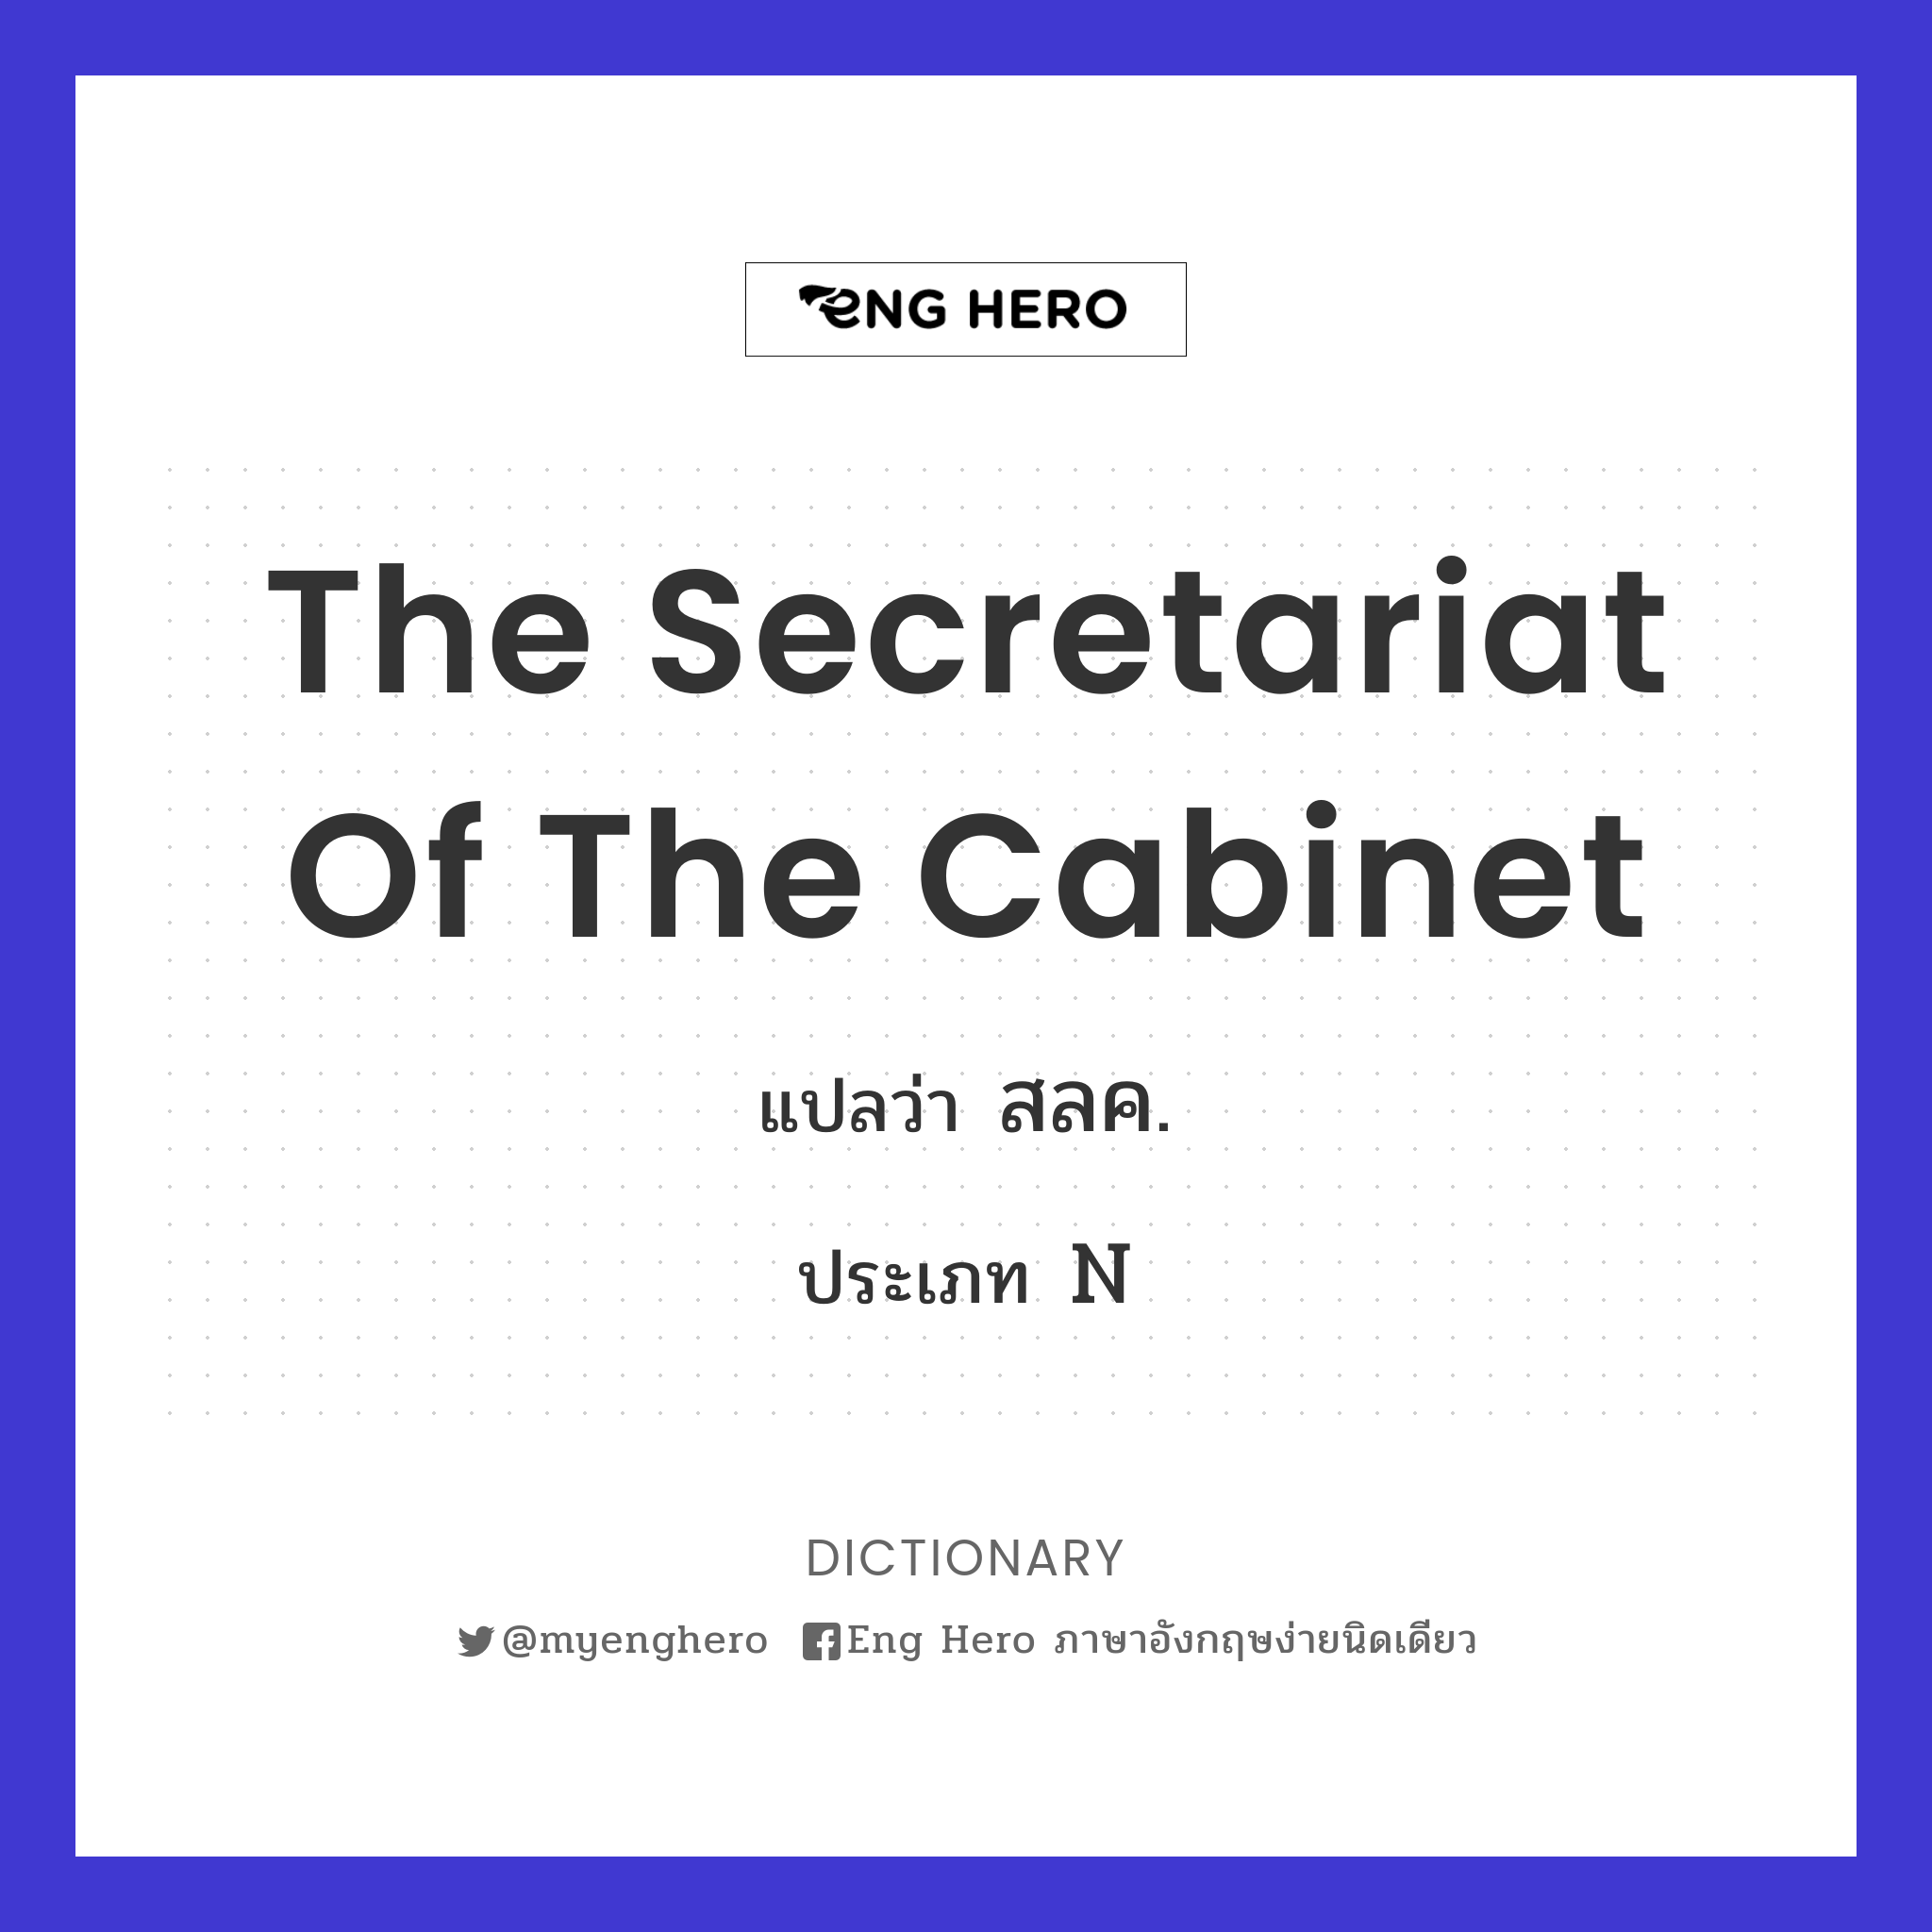 The Secretariat of the Cabinet